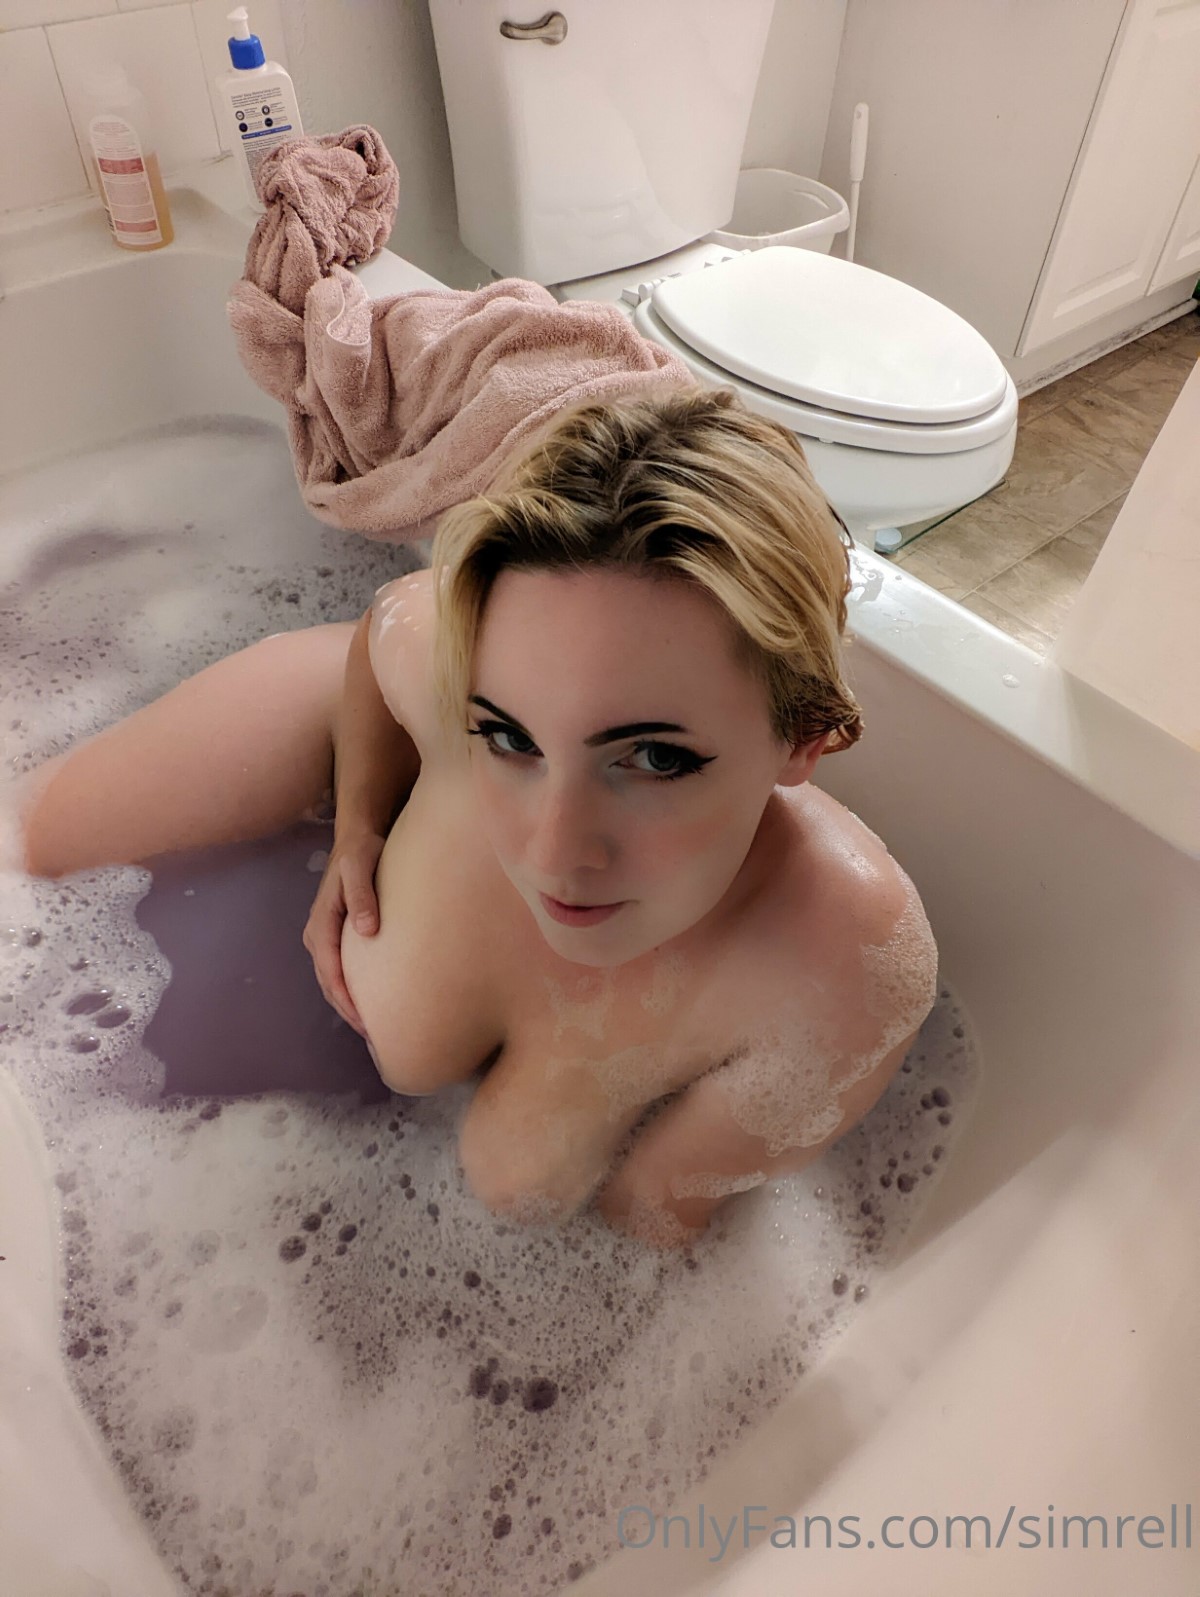 katie simrell bubble bath